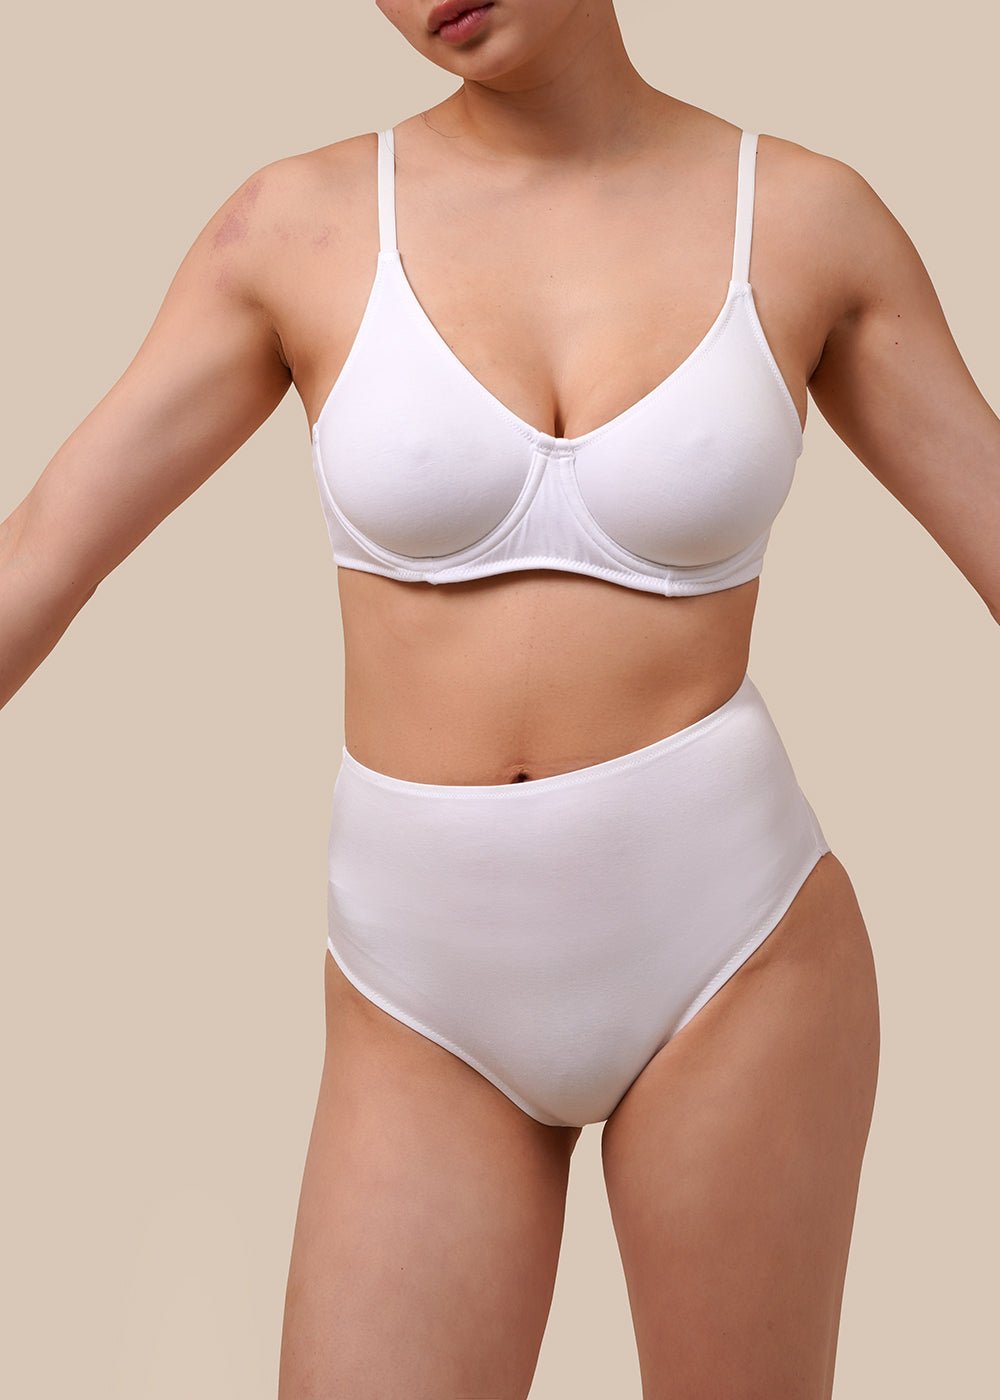 Nico Underwear, Full Cup Wireless Bra in White